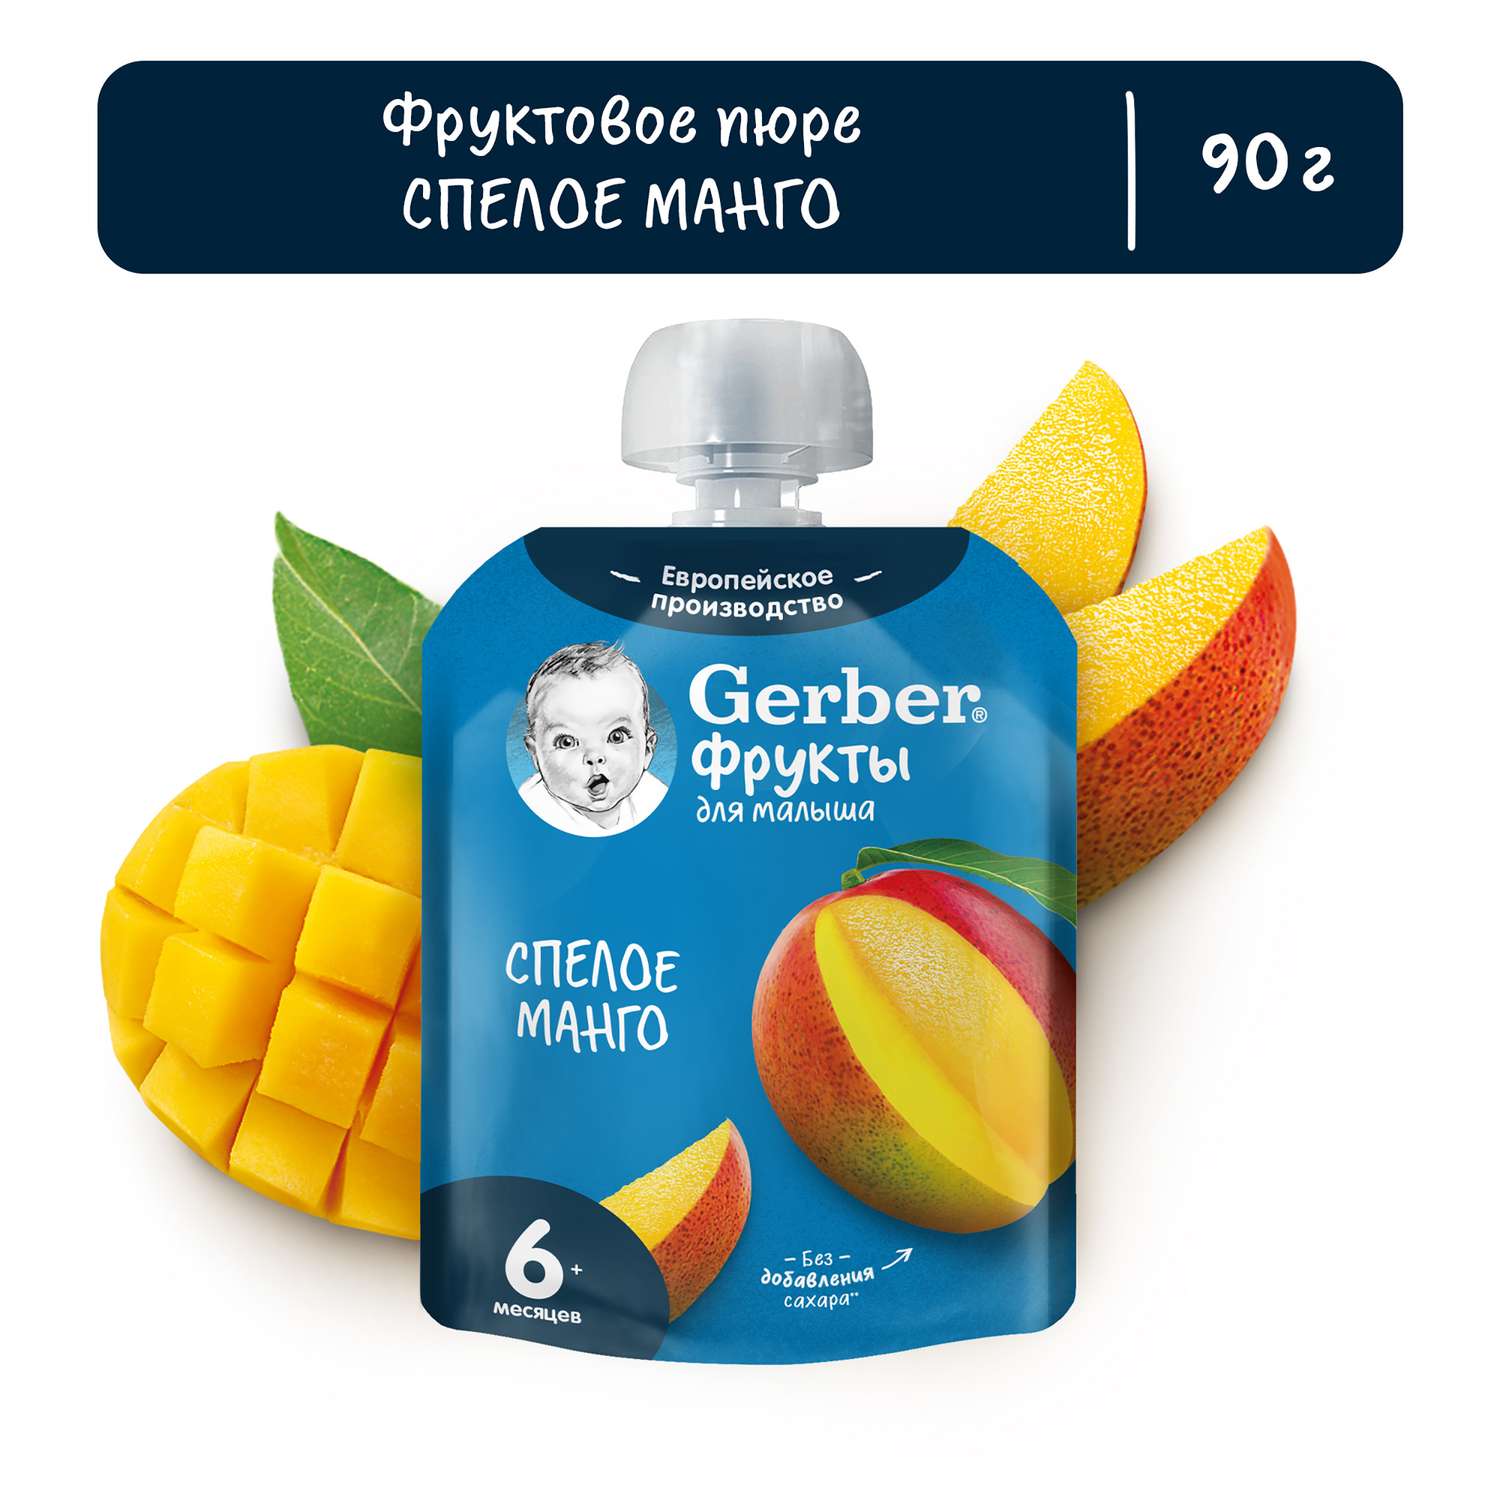 Пюре Gerber манго 90г с 6месяцев - фото 1